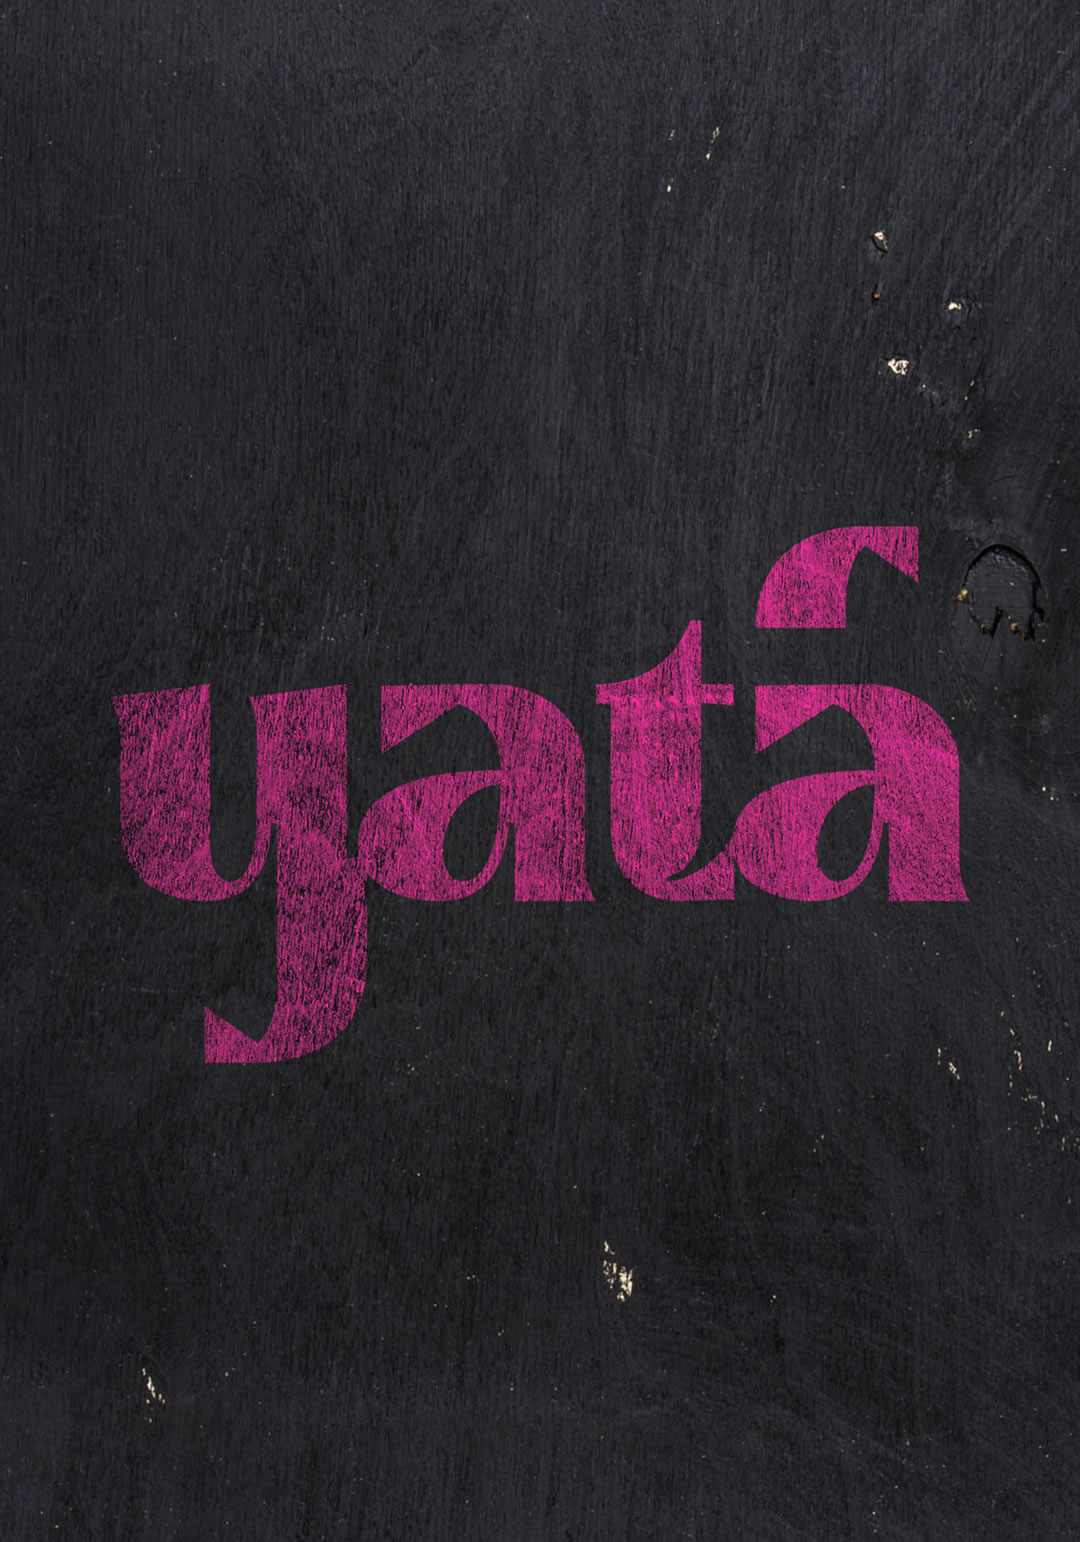 Yatá › Diseño de marca (diseño de logo)